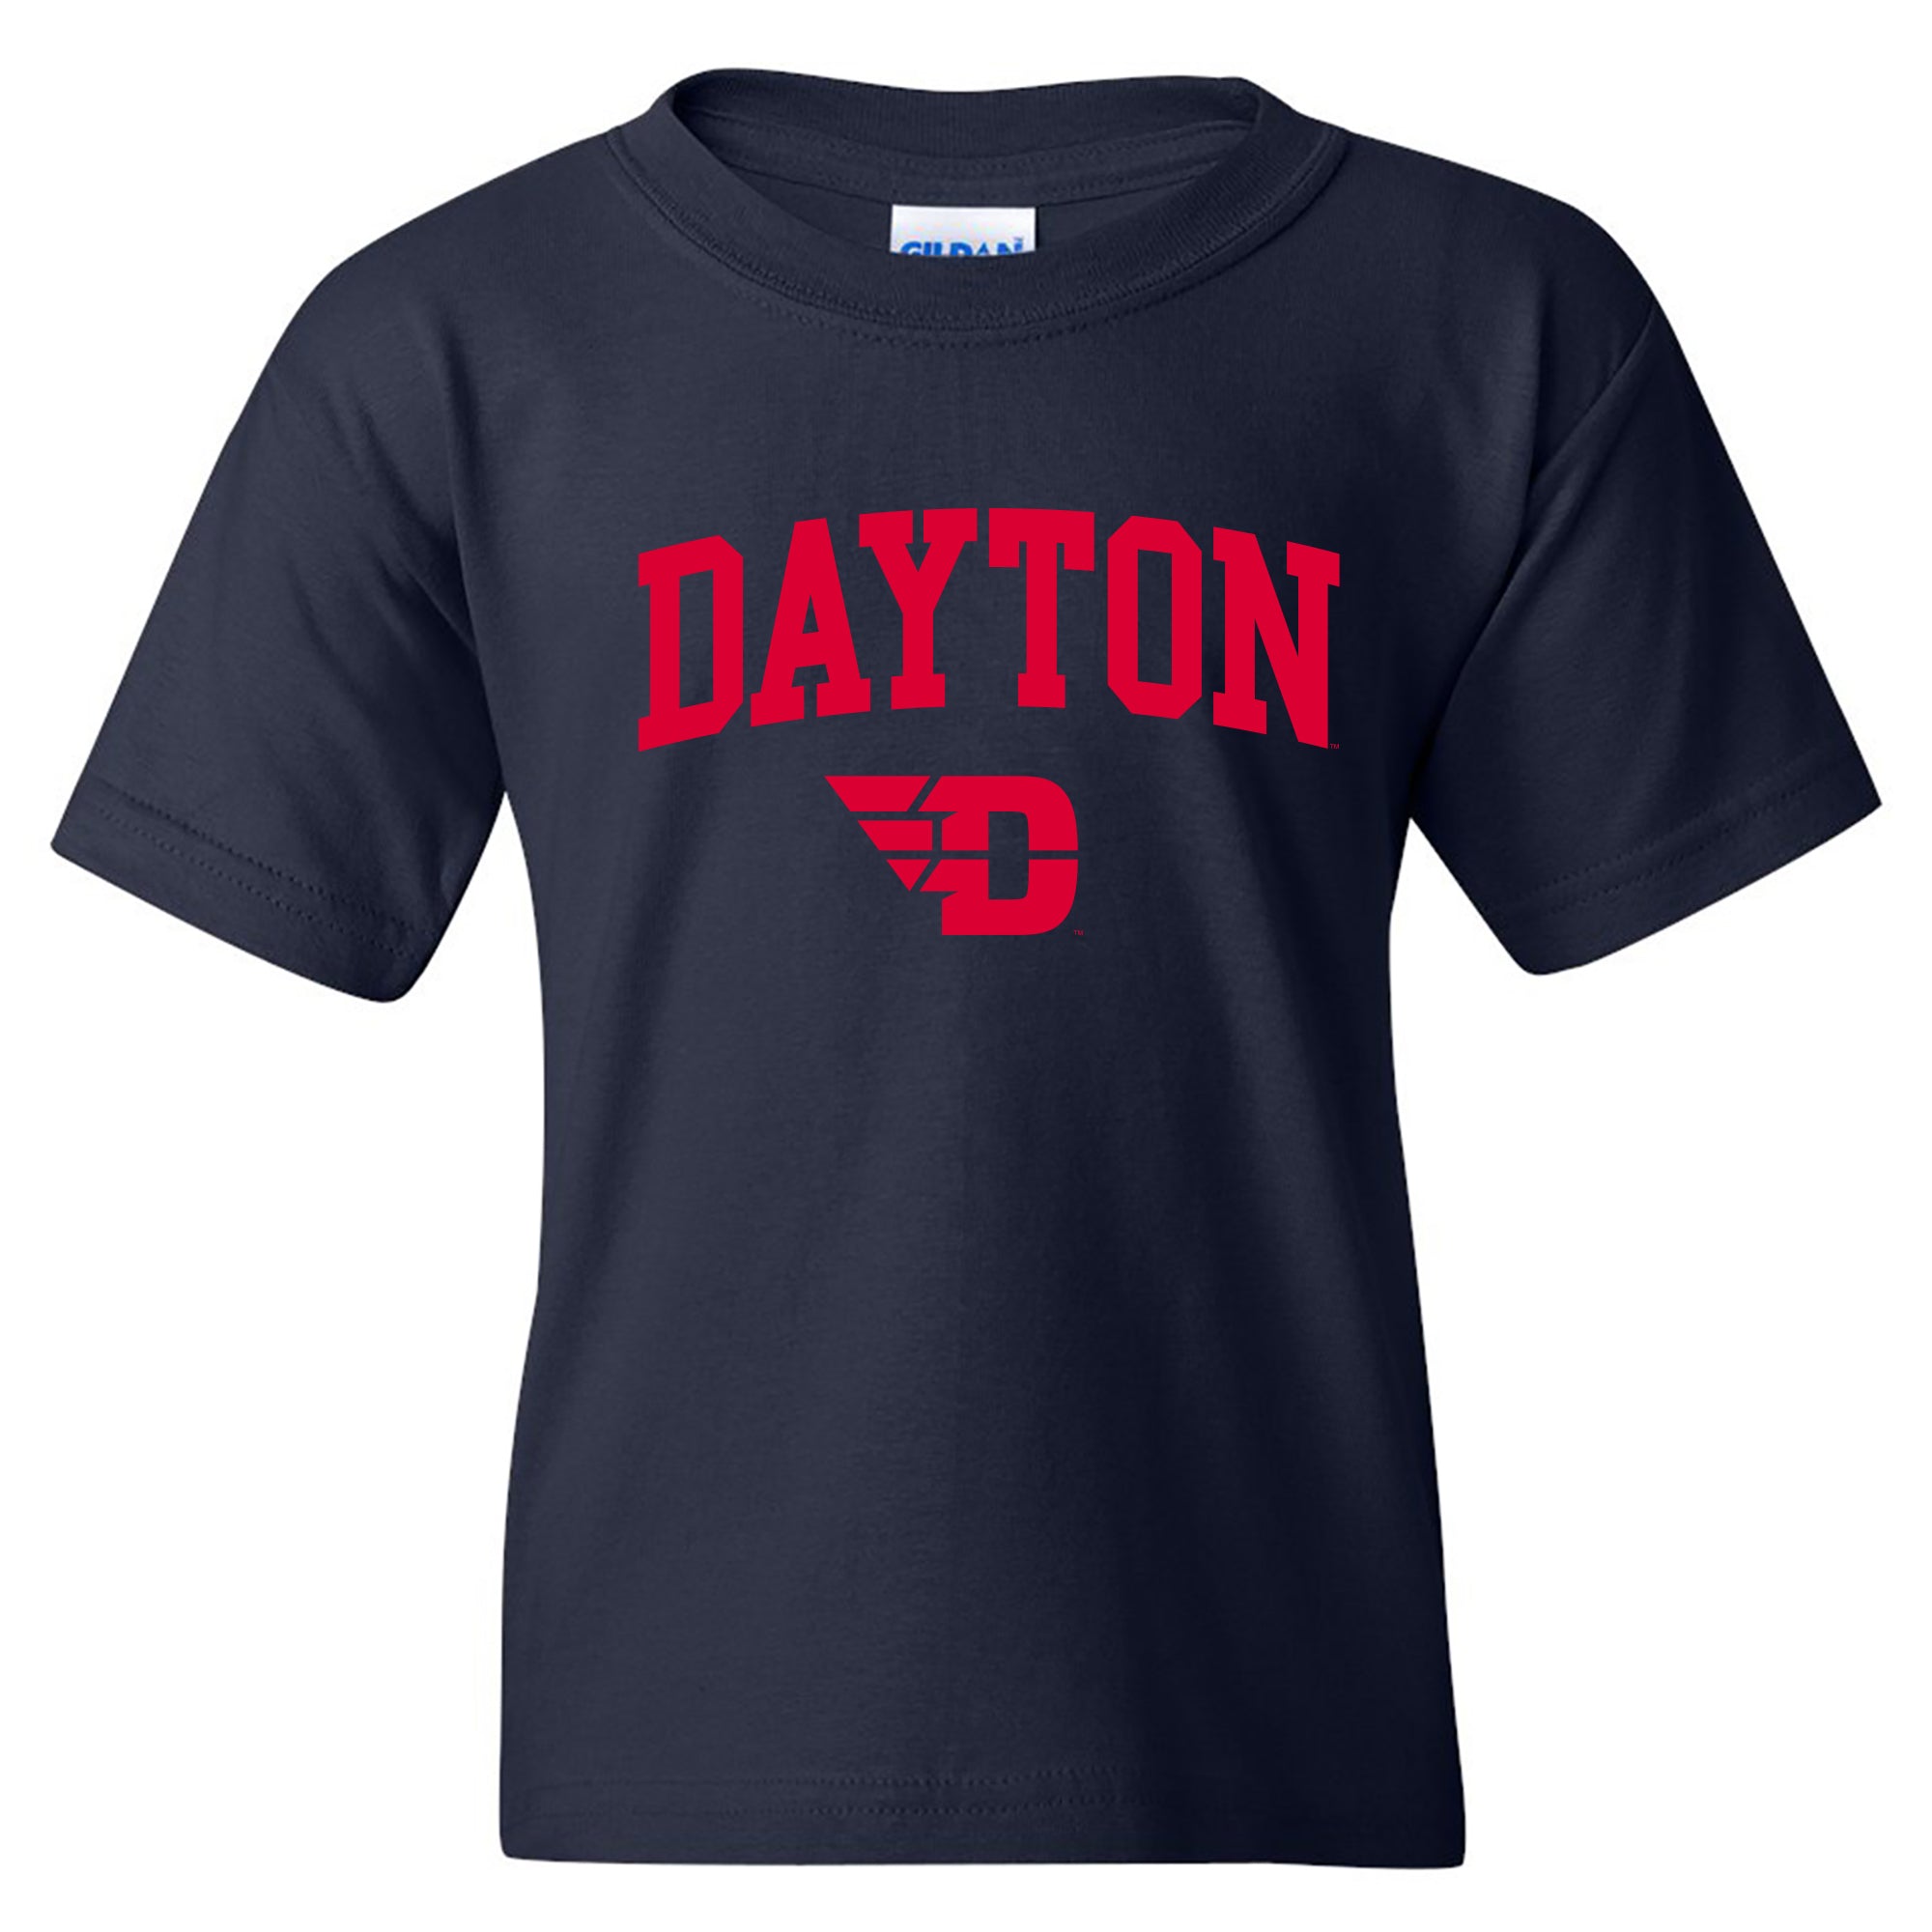 University of Dayton Official Flyers Shop